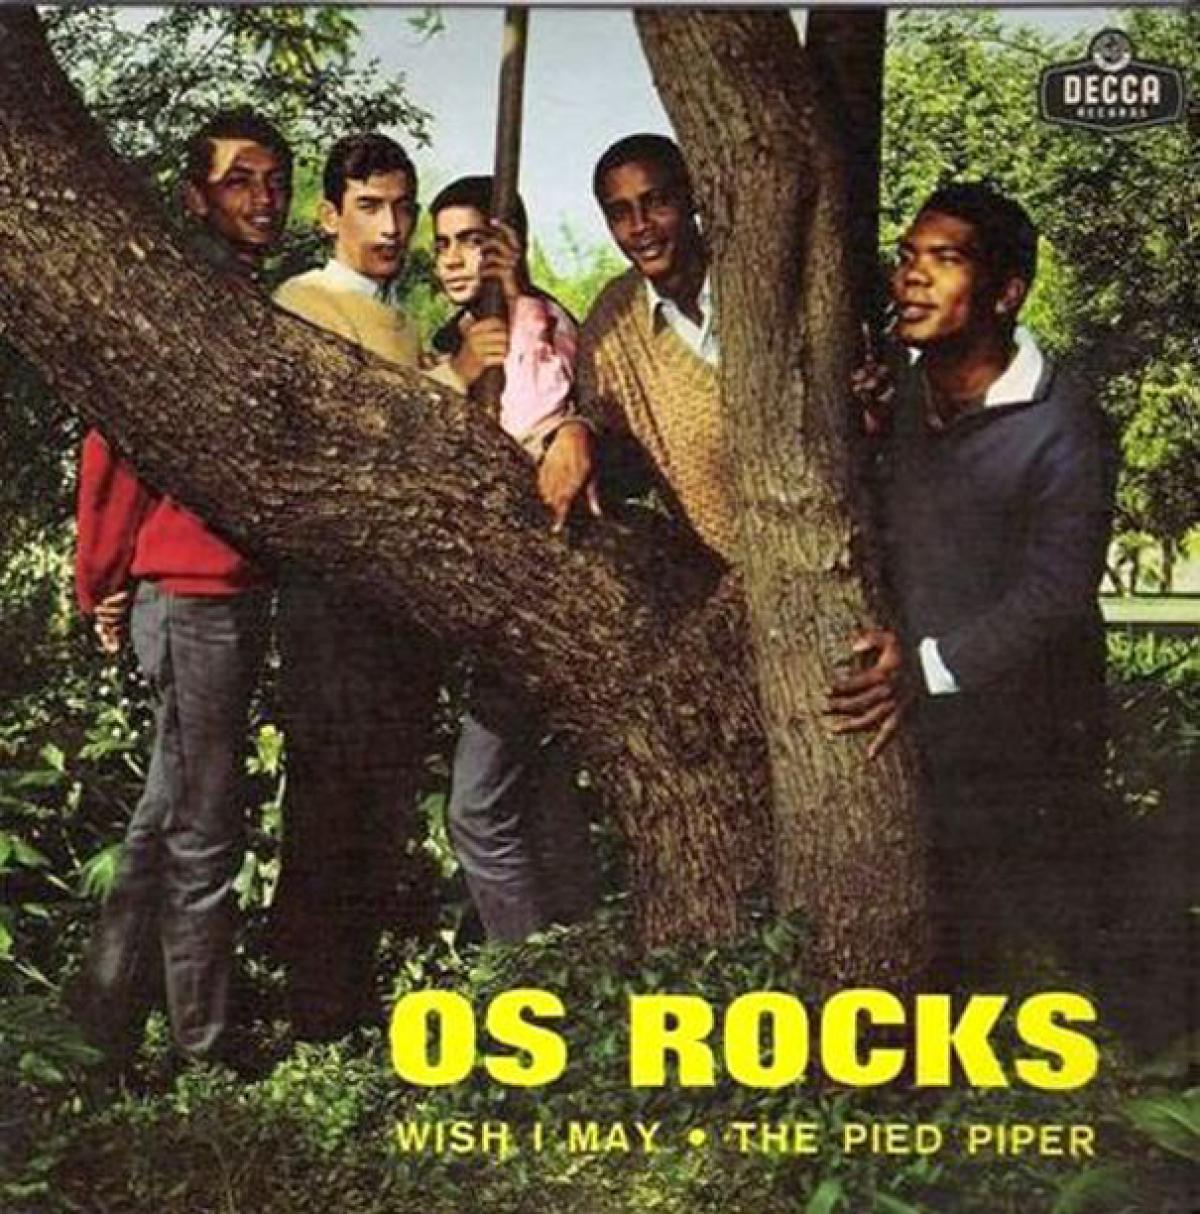 OS ROCKS - Wish I May | The Pied Piper (Decca Records)